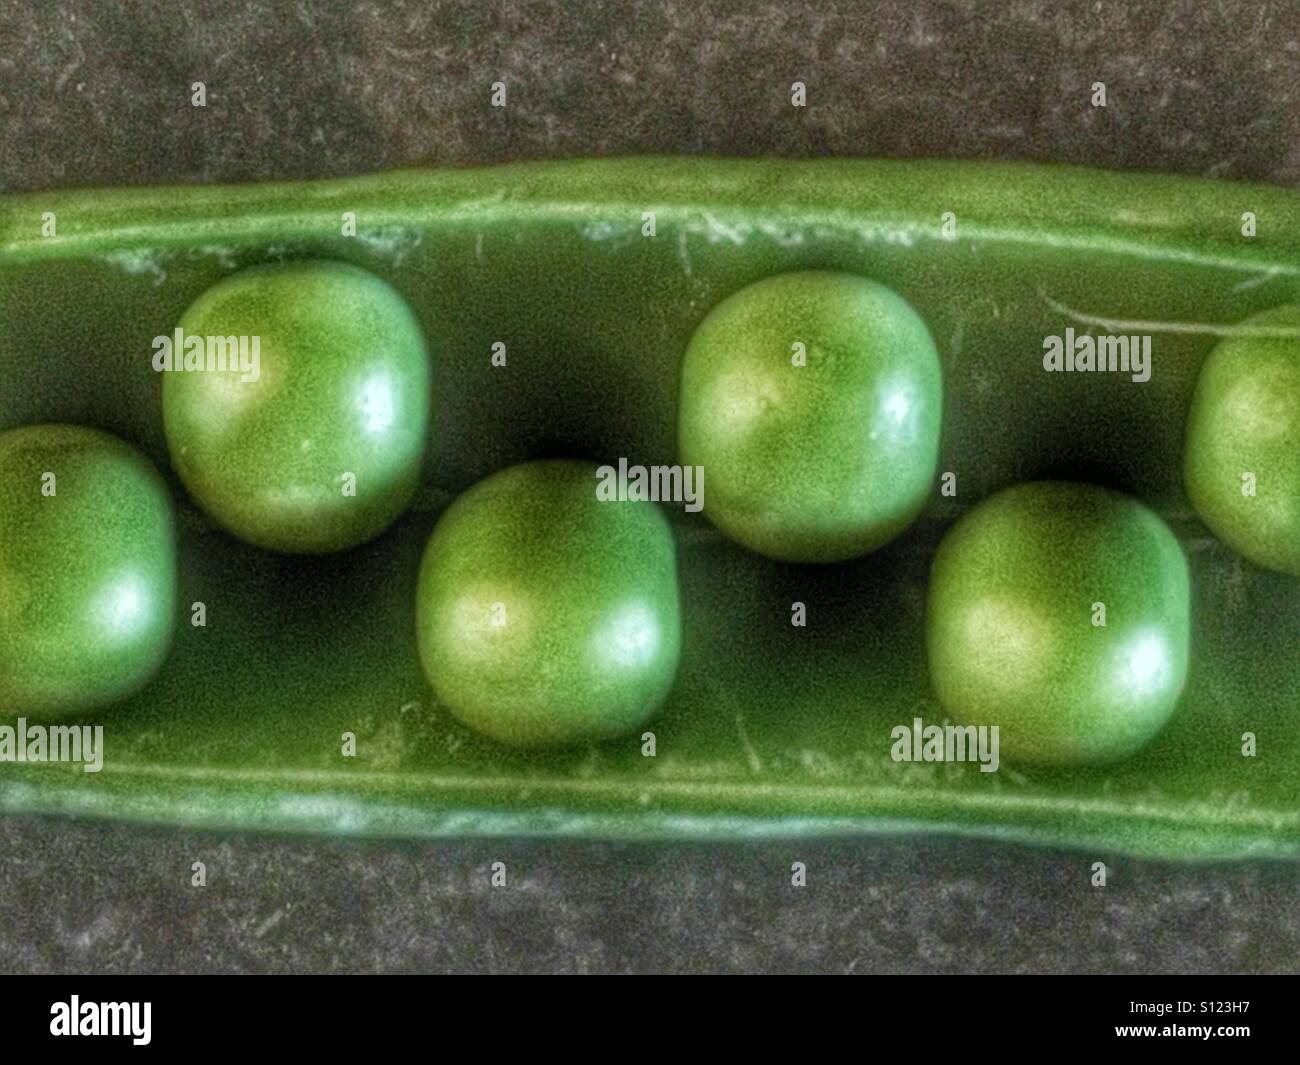 Peas in a pod Stock Photo